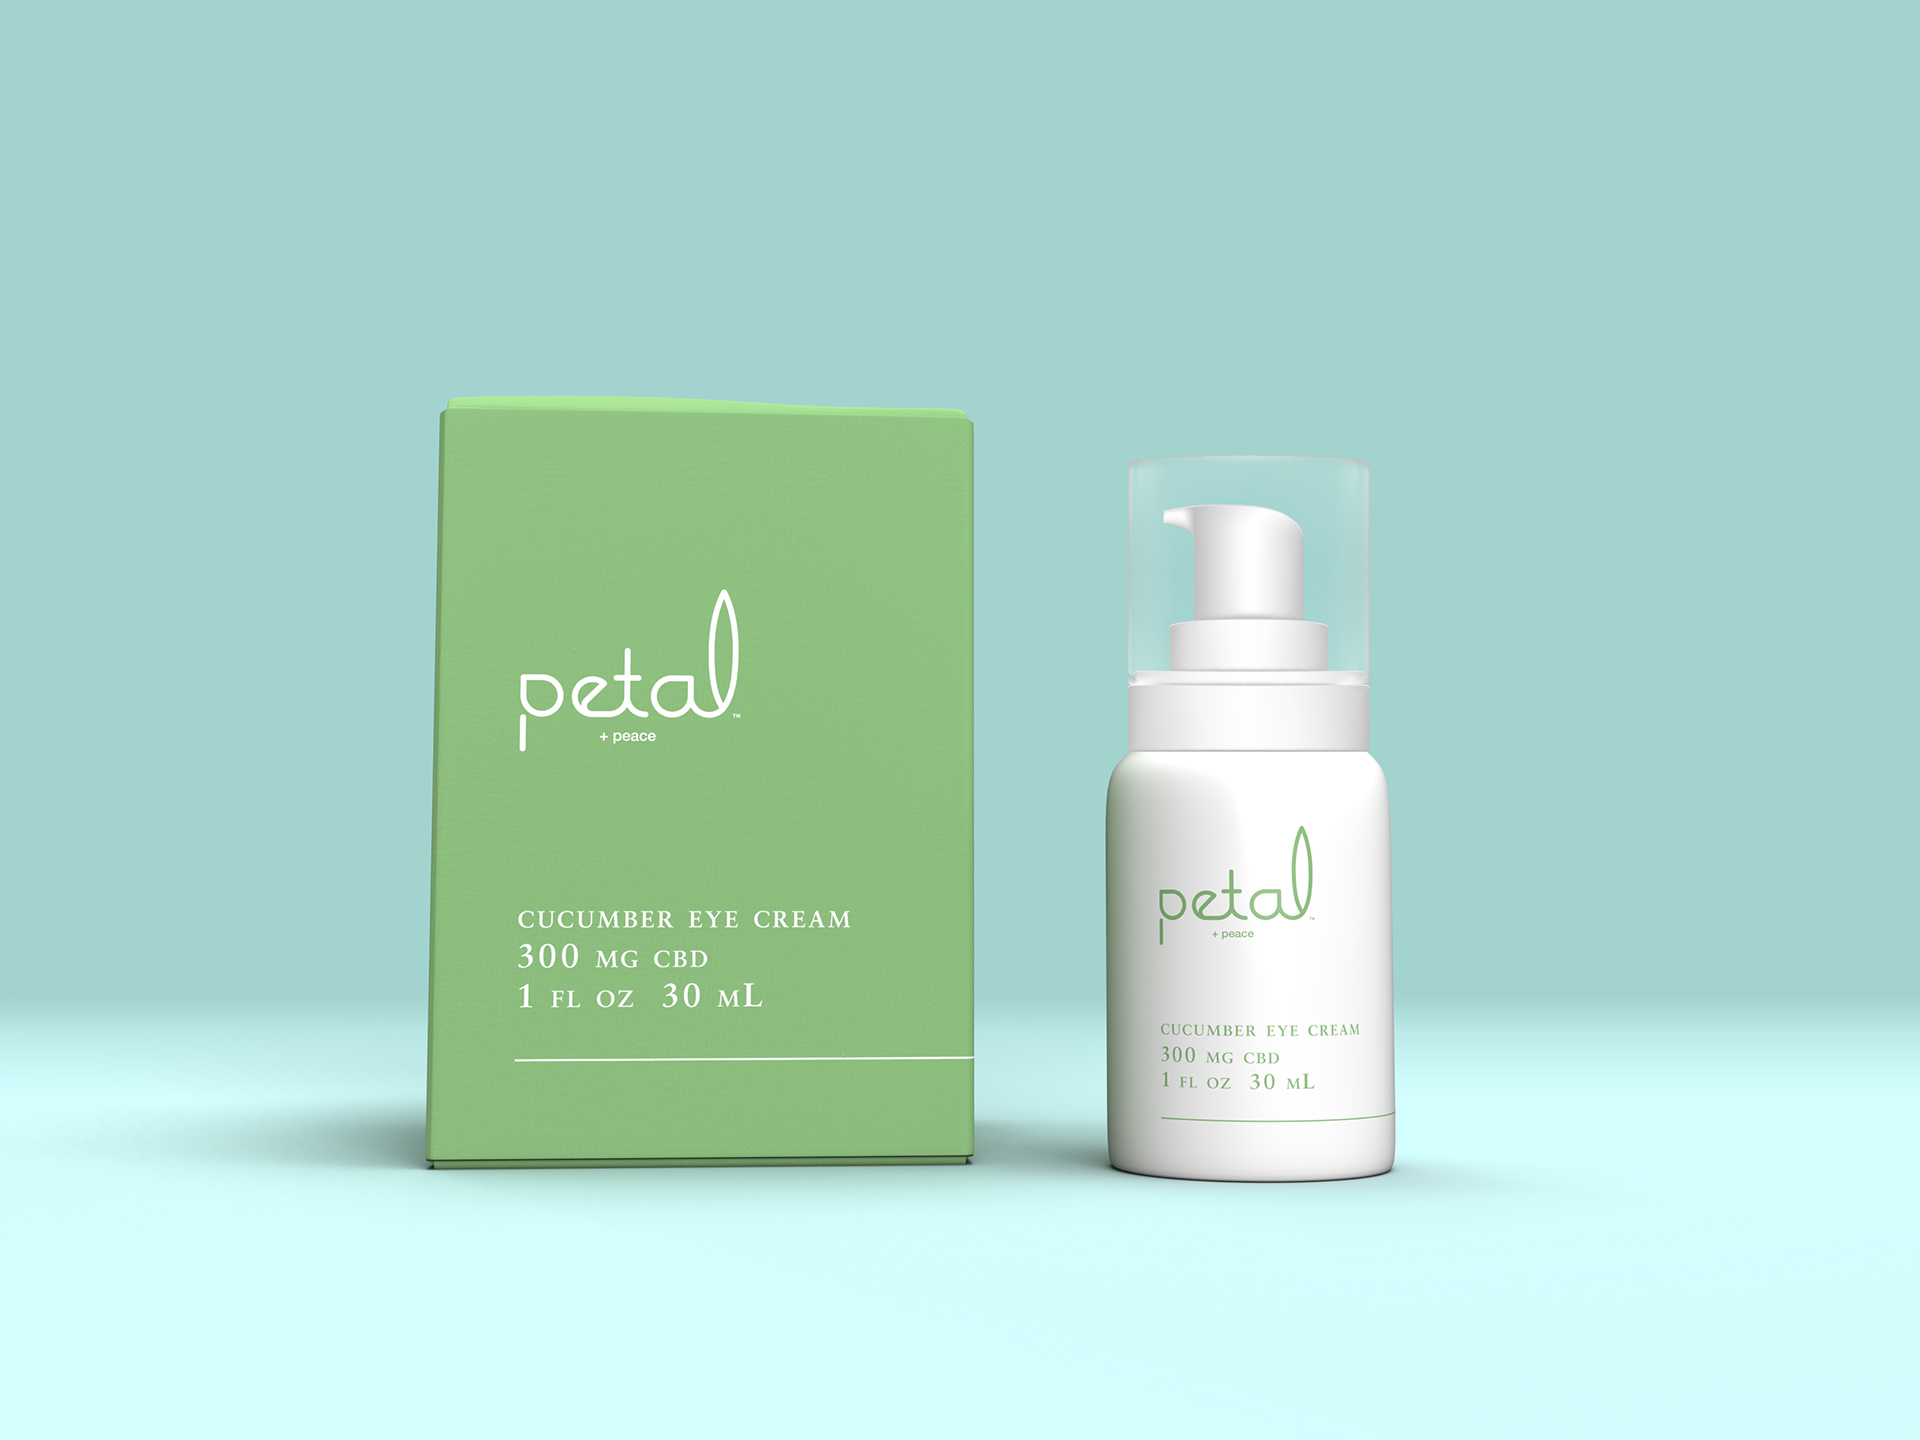 Petal - Cucumber eye cream